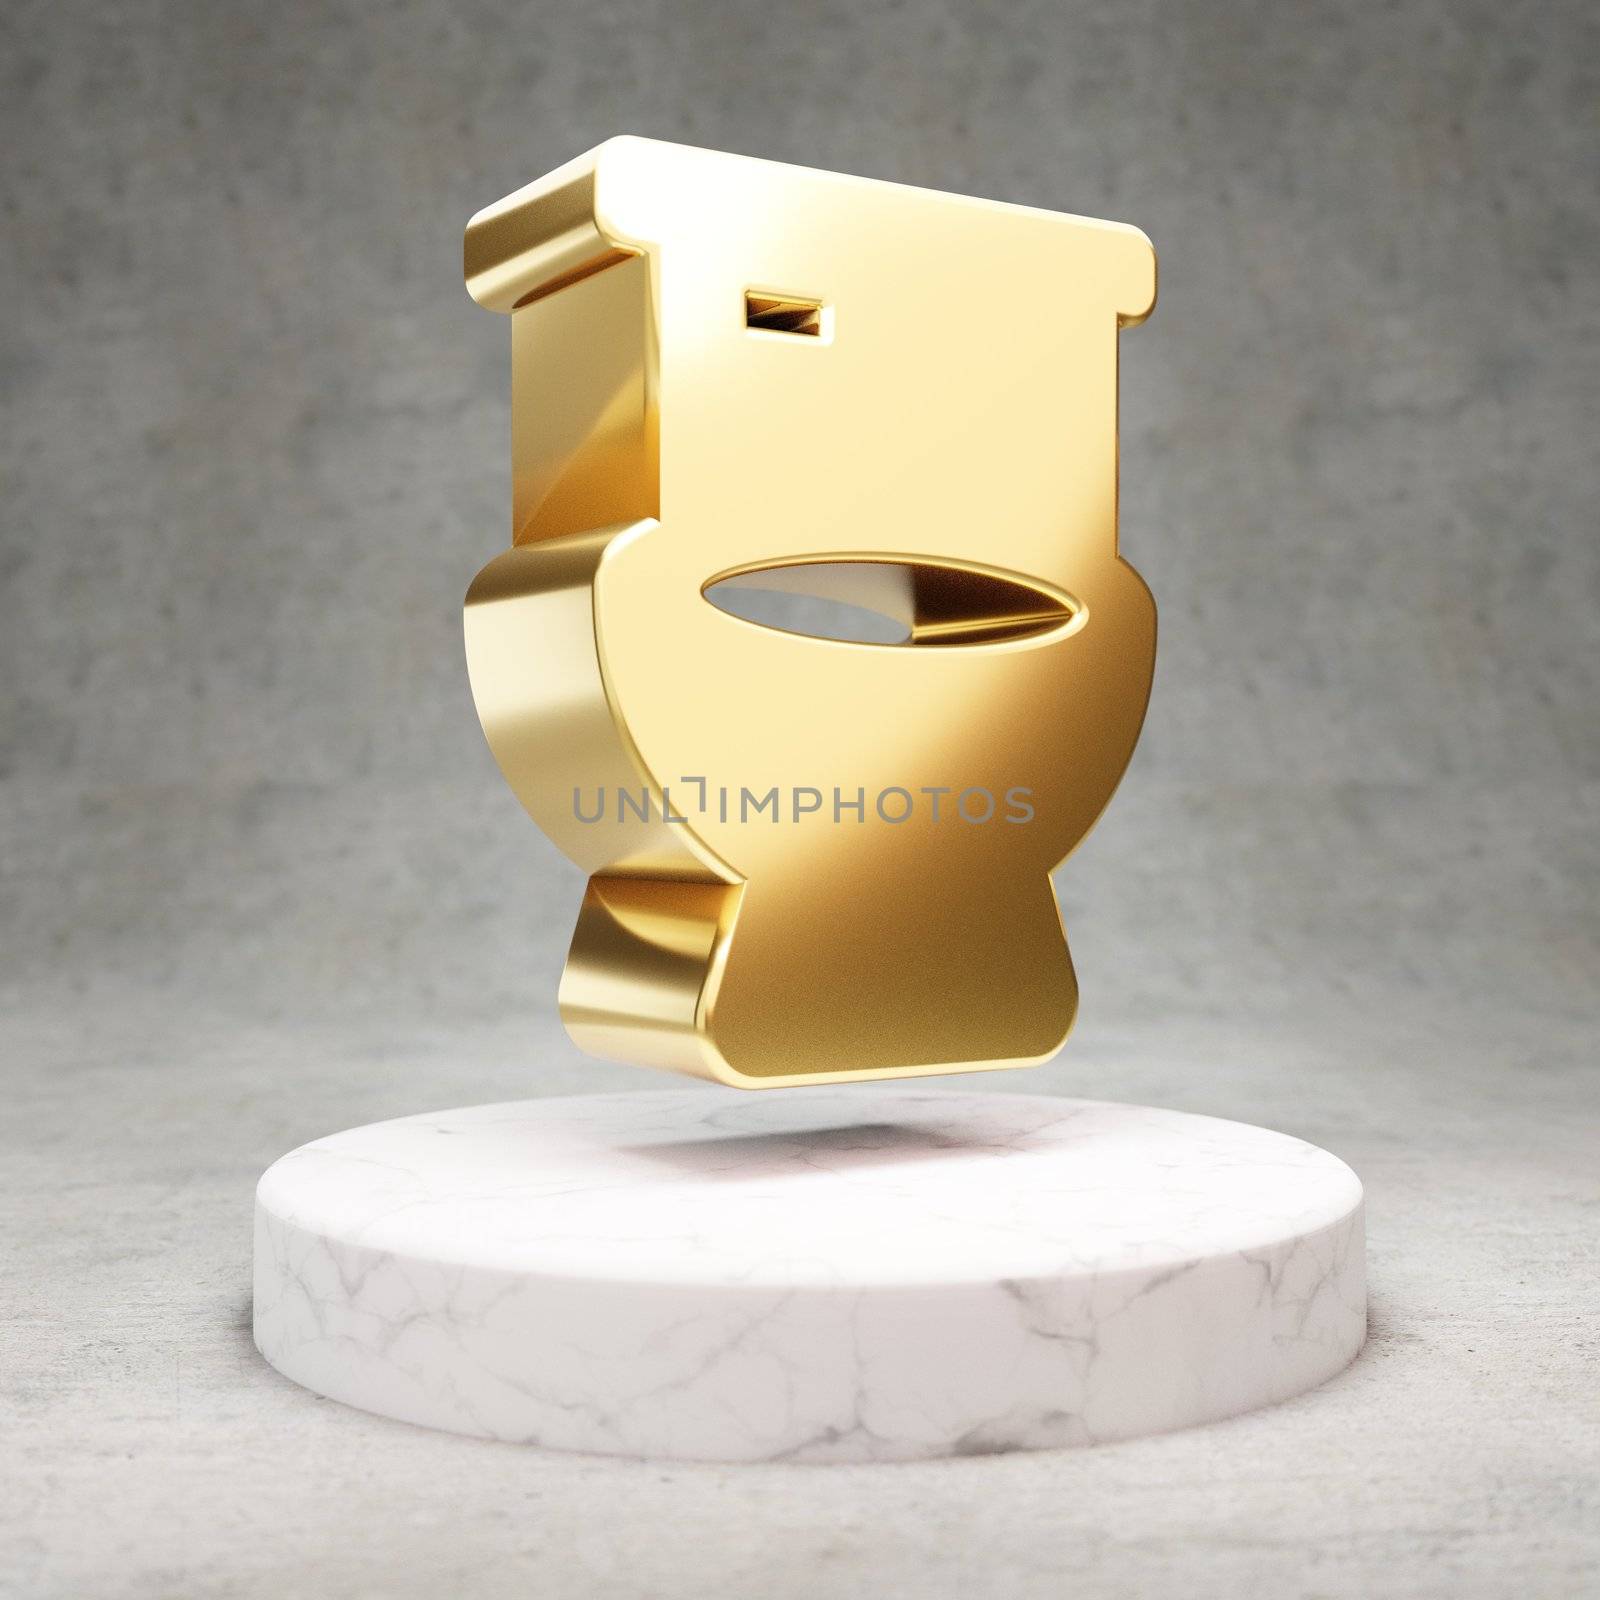 Toilet icon. Gold glossy Toilet symbol on white marble podium. Modern icon for website, social media, presentation, design template element. 3D render.